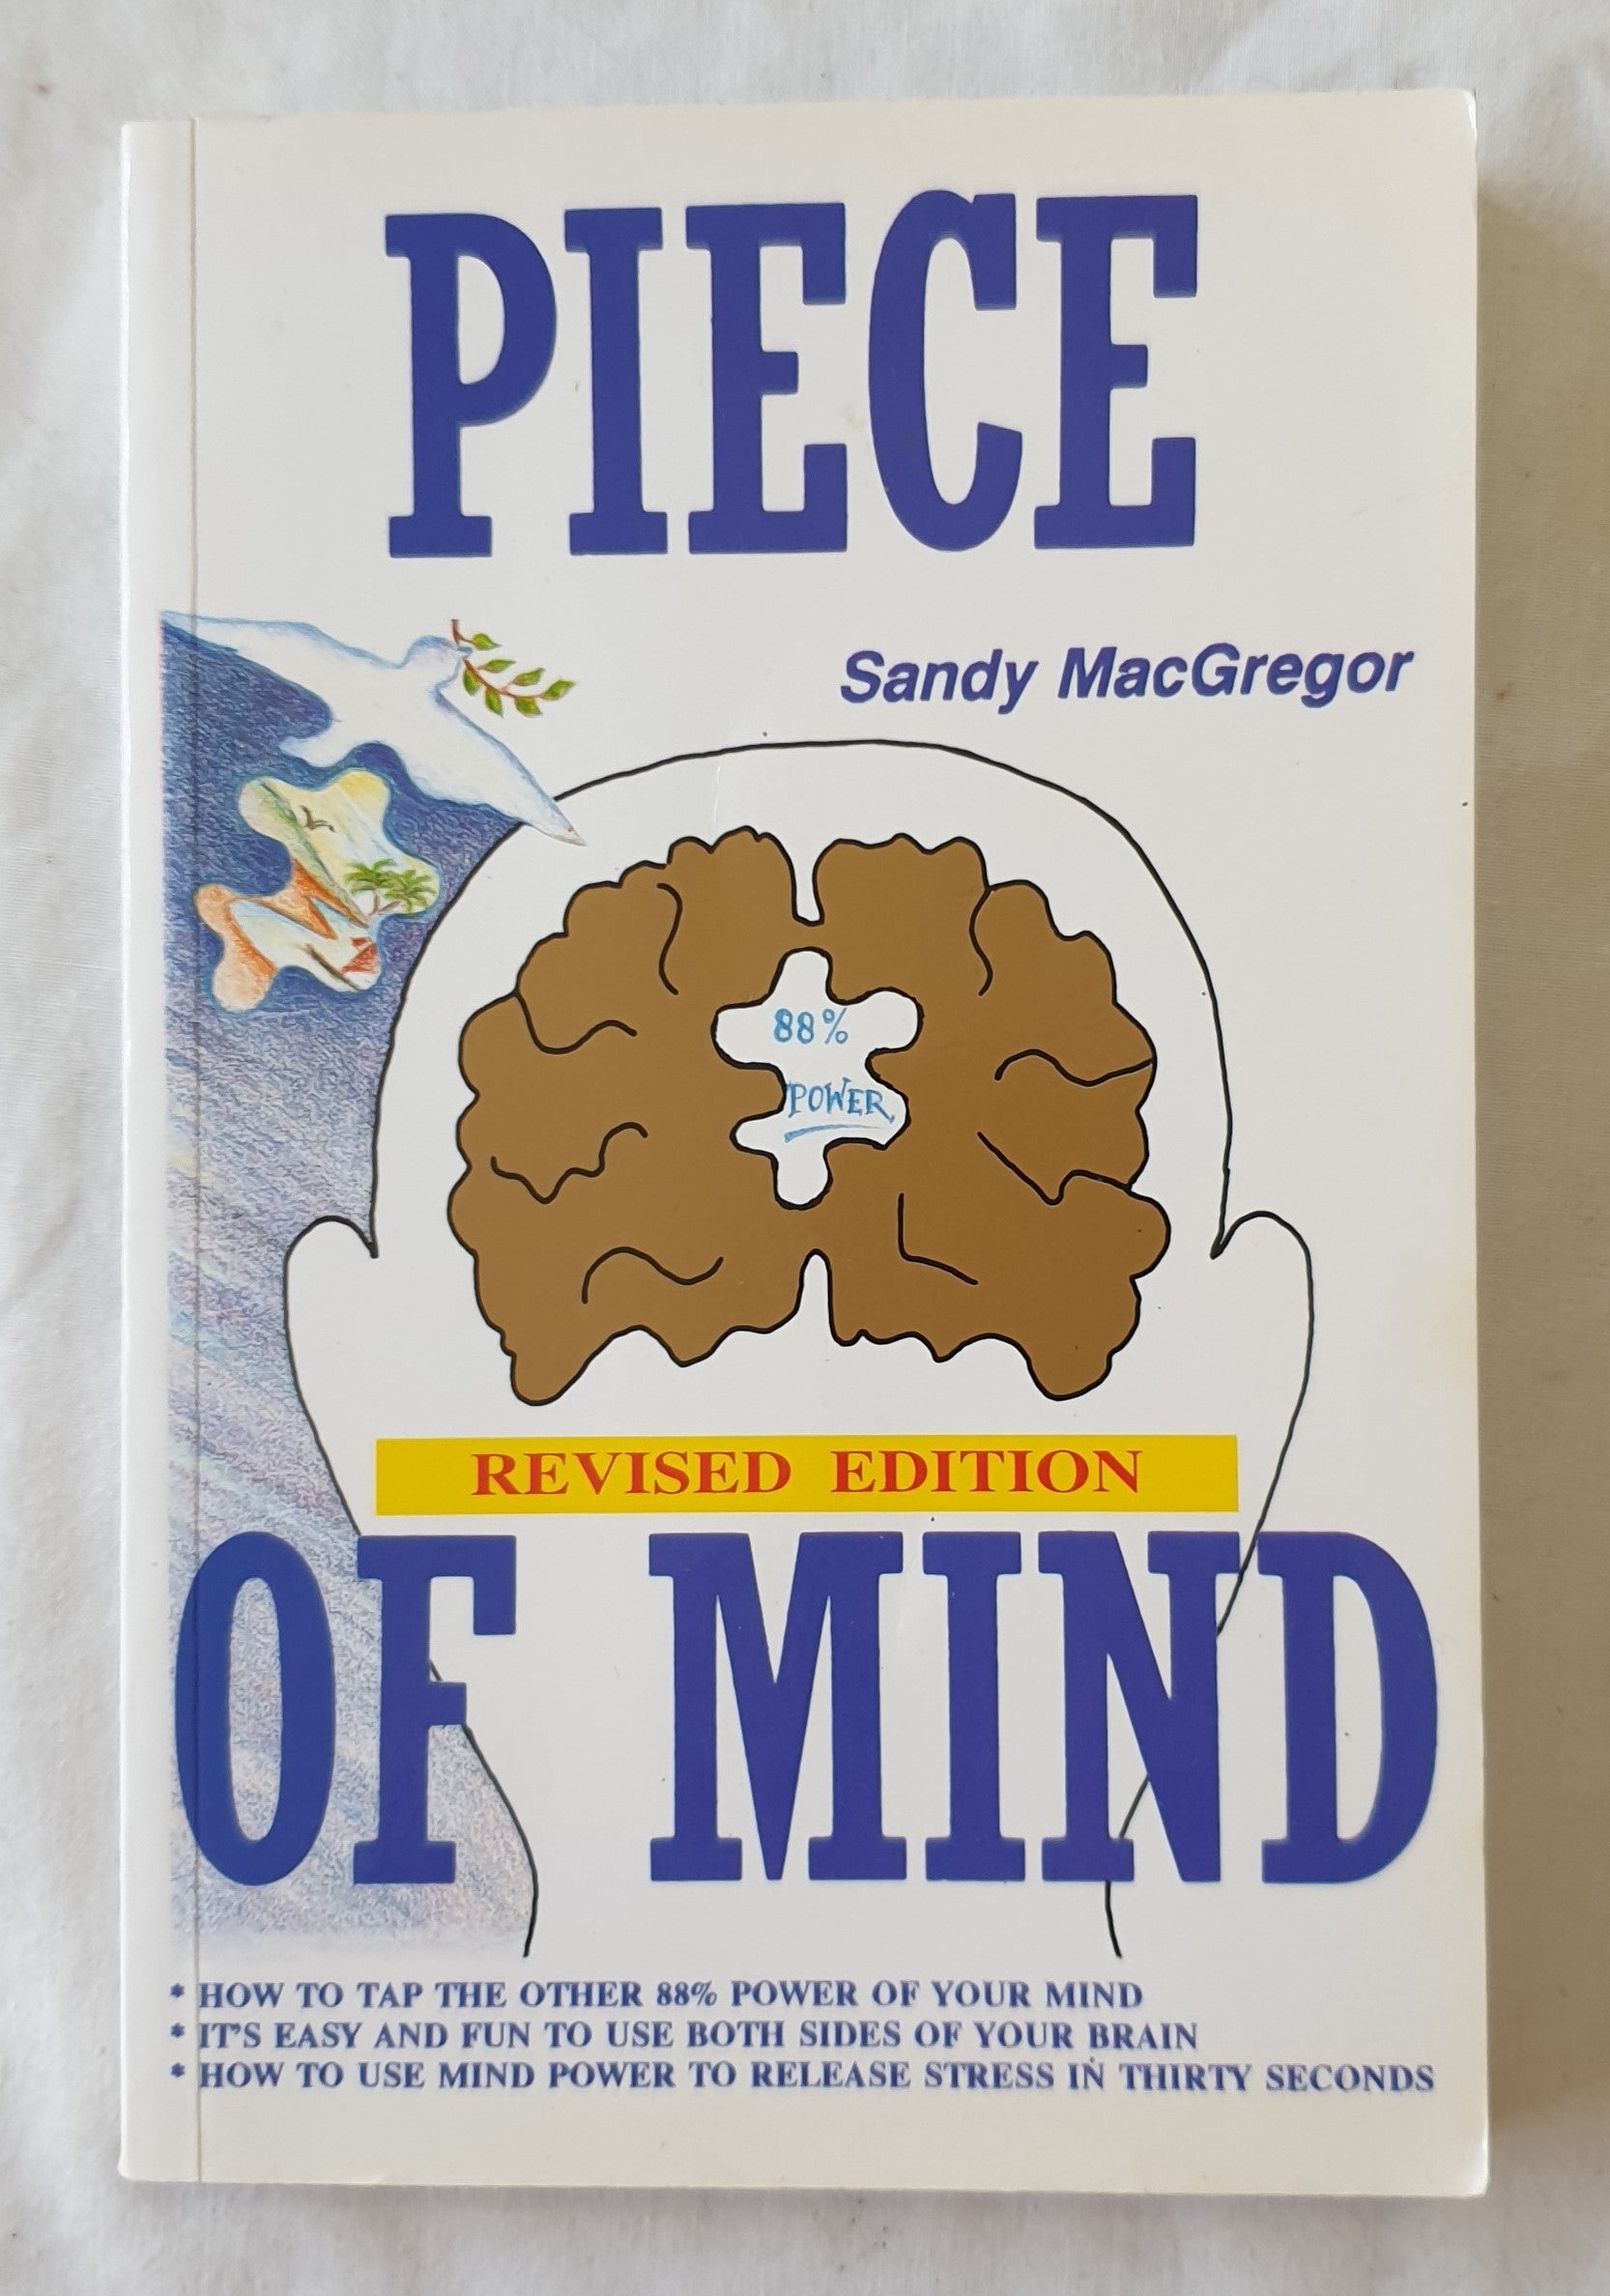 Piece of Mind by Sandy MacGregor